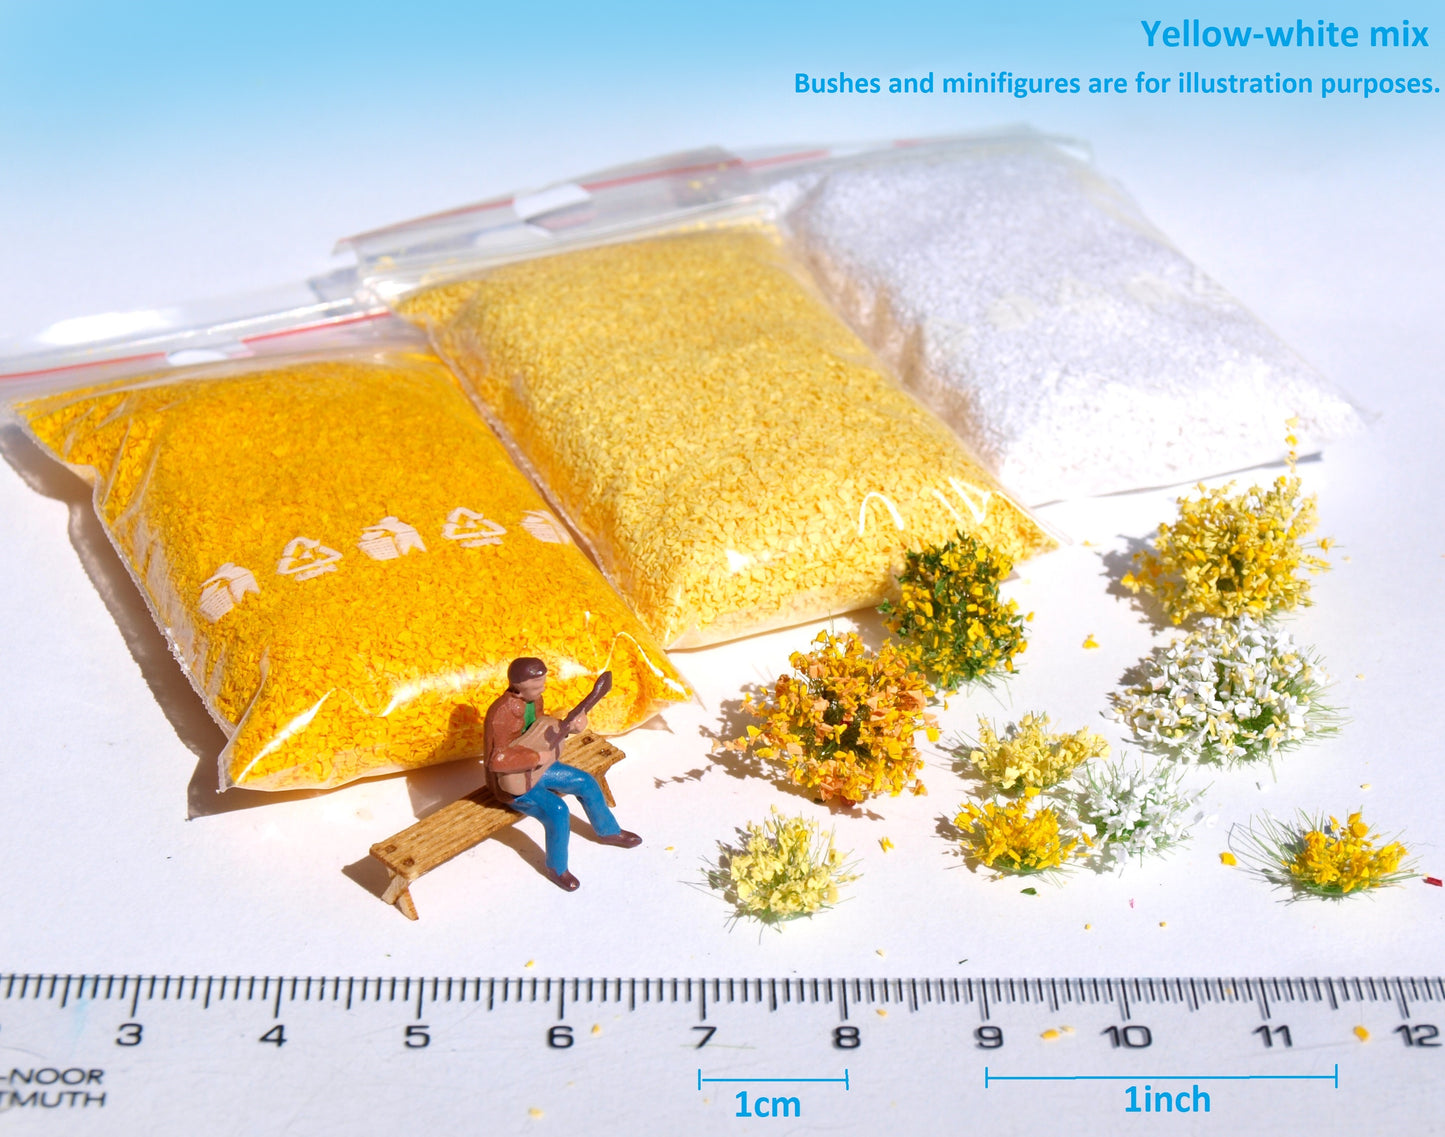 naaron88 Miniature Model Leaves Petal Yellow mix dollhouse diorama scenery